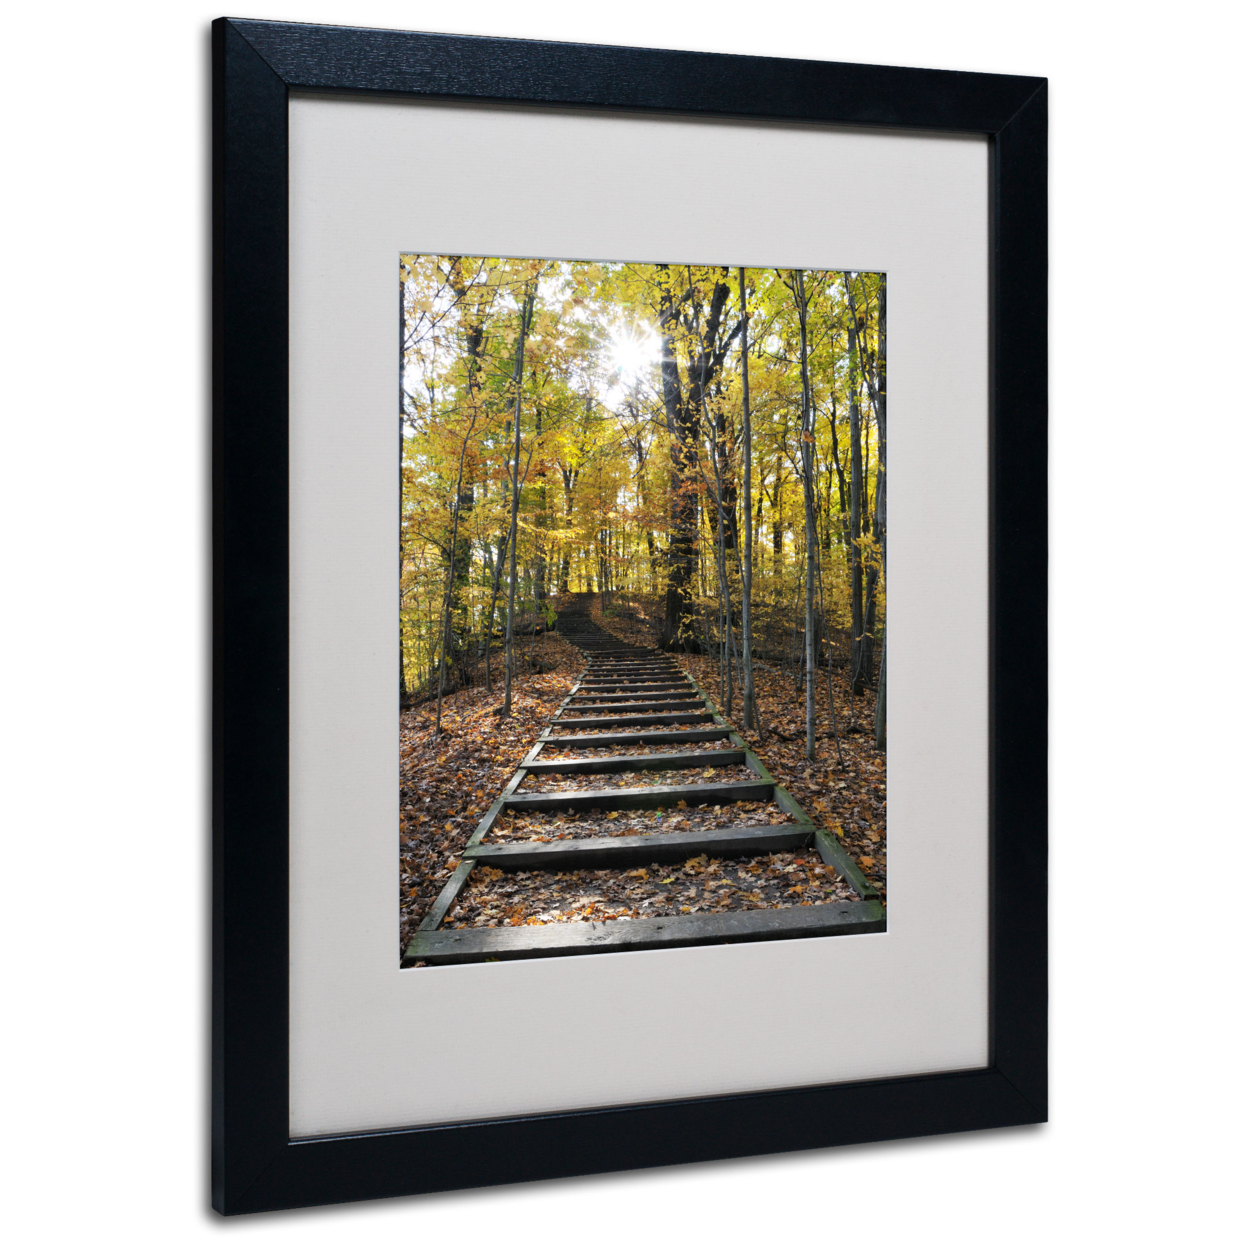 Kurt Shaffer 'Fall Stairway 2' Black Wooden Framed Art 18 X 22 Inches